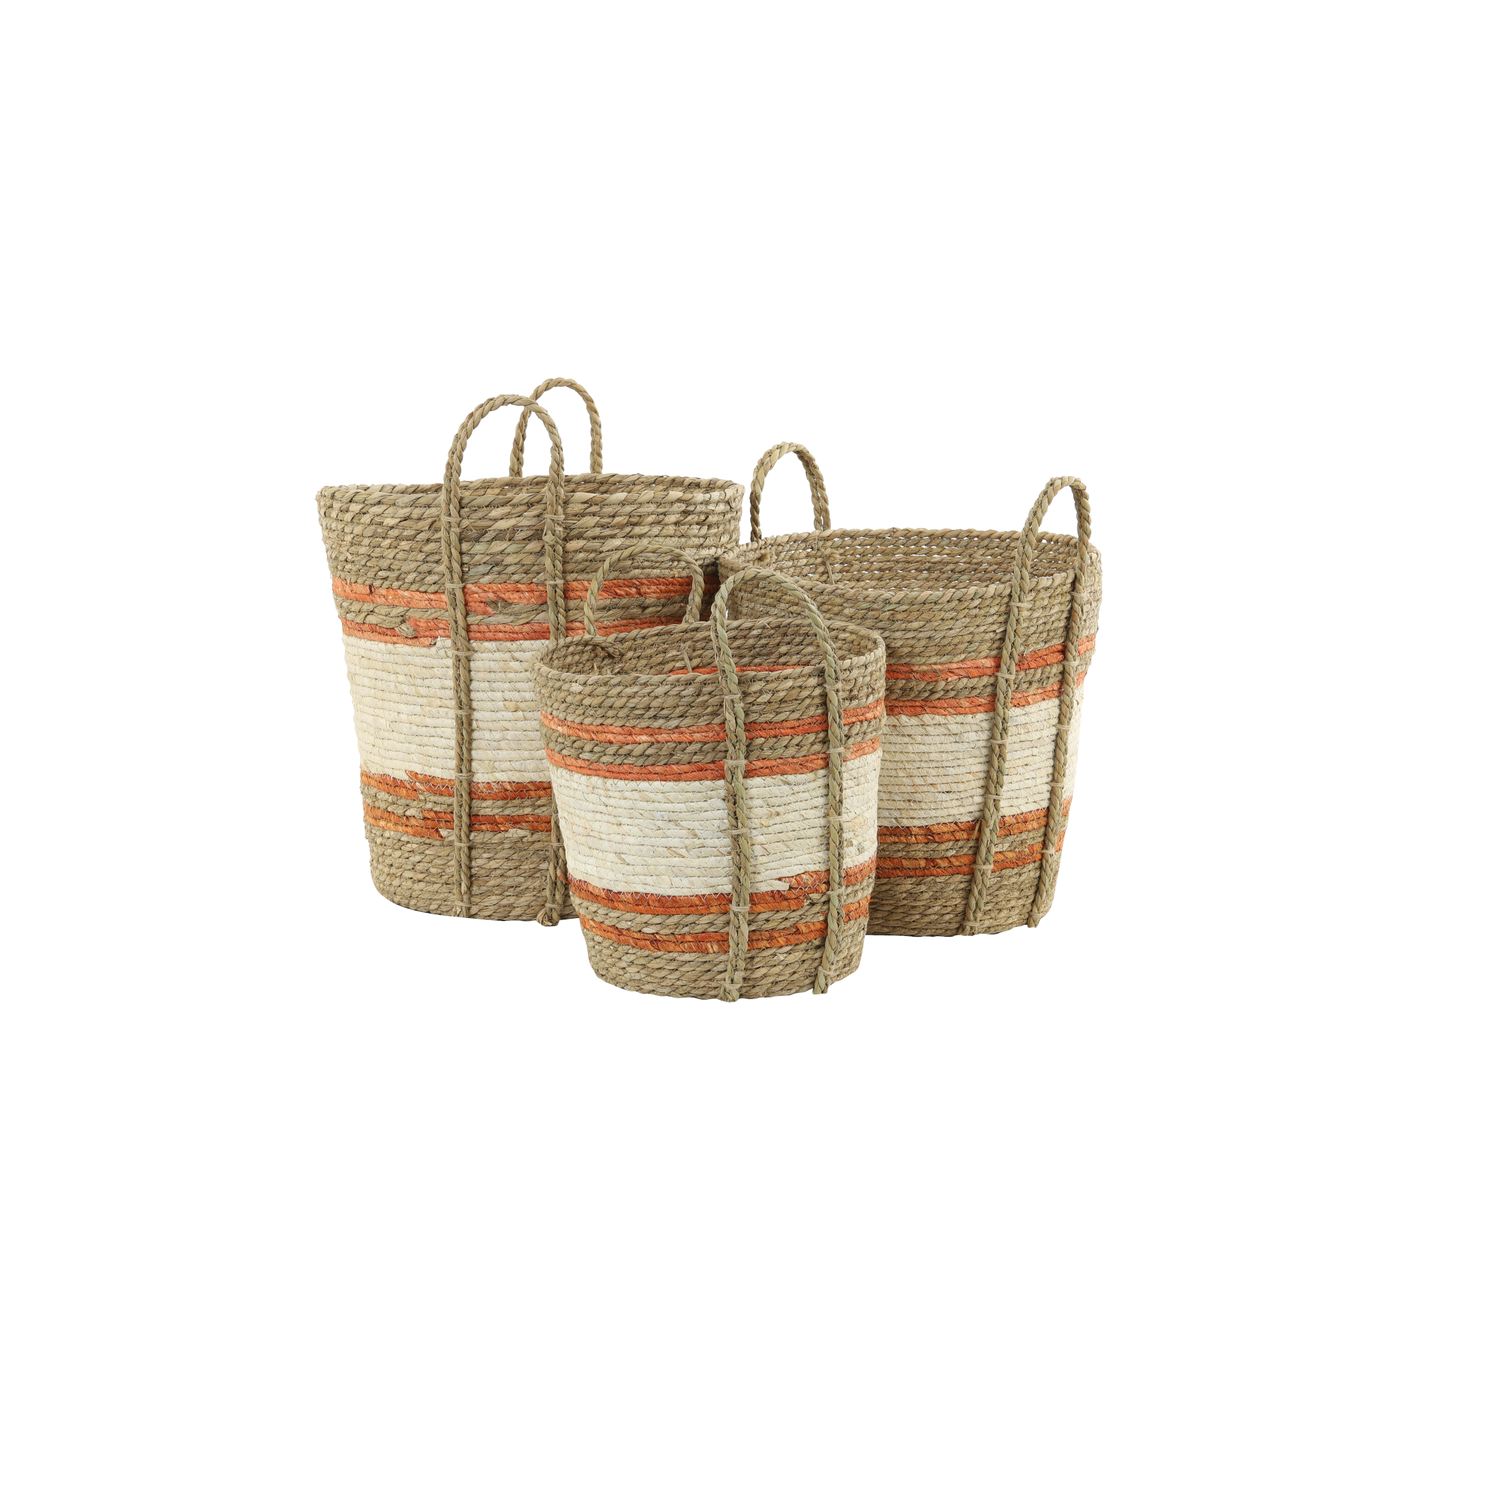 Set of 3 baskets GAMEIRO handmade natural-white-orange